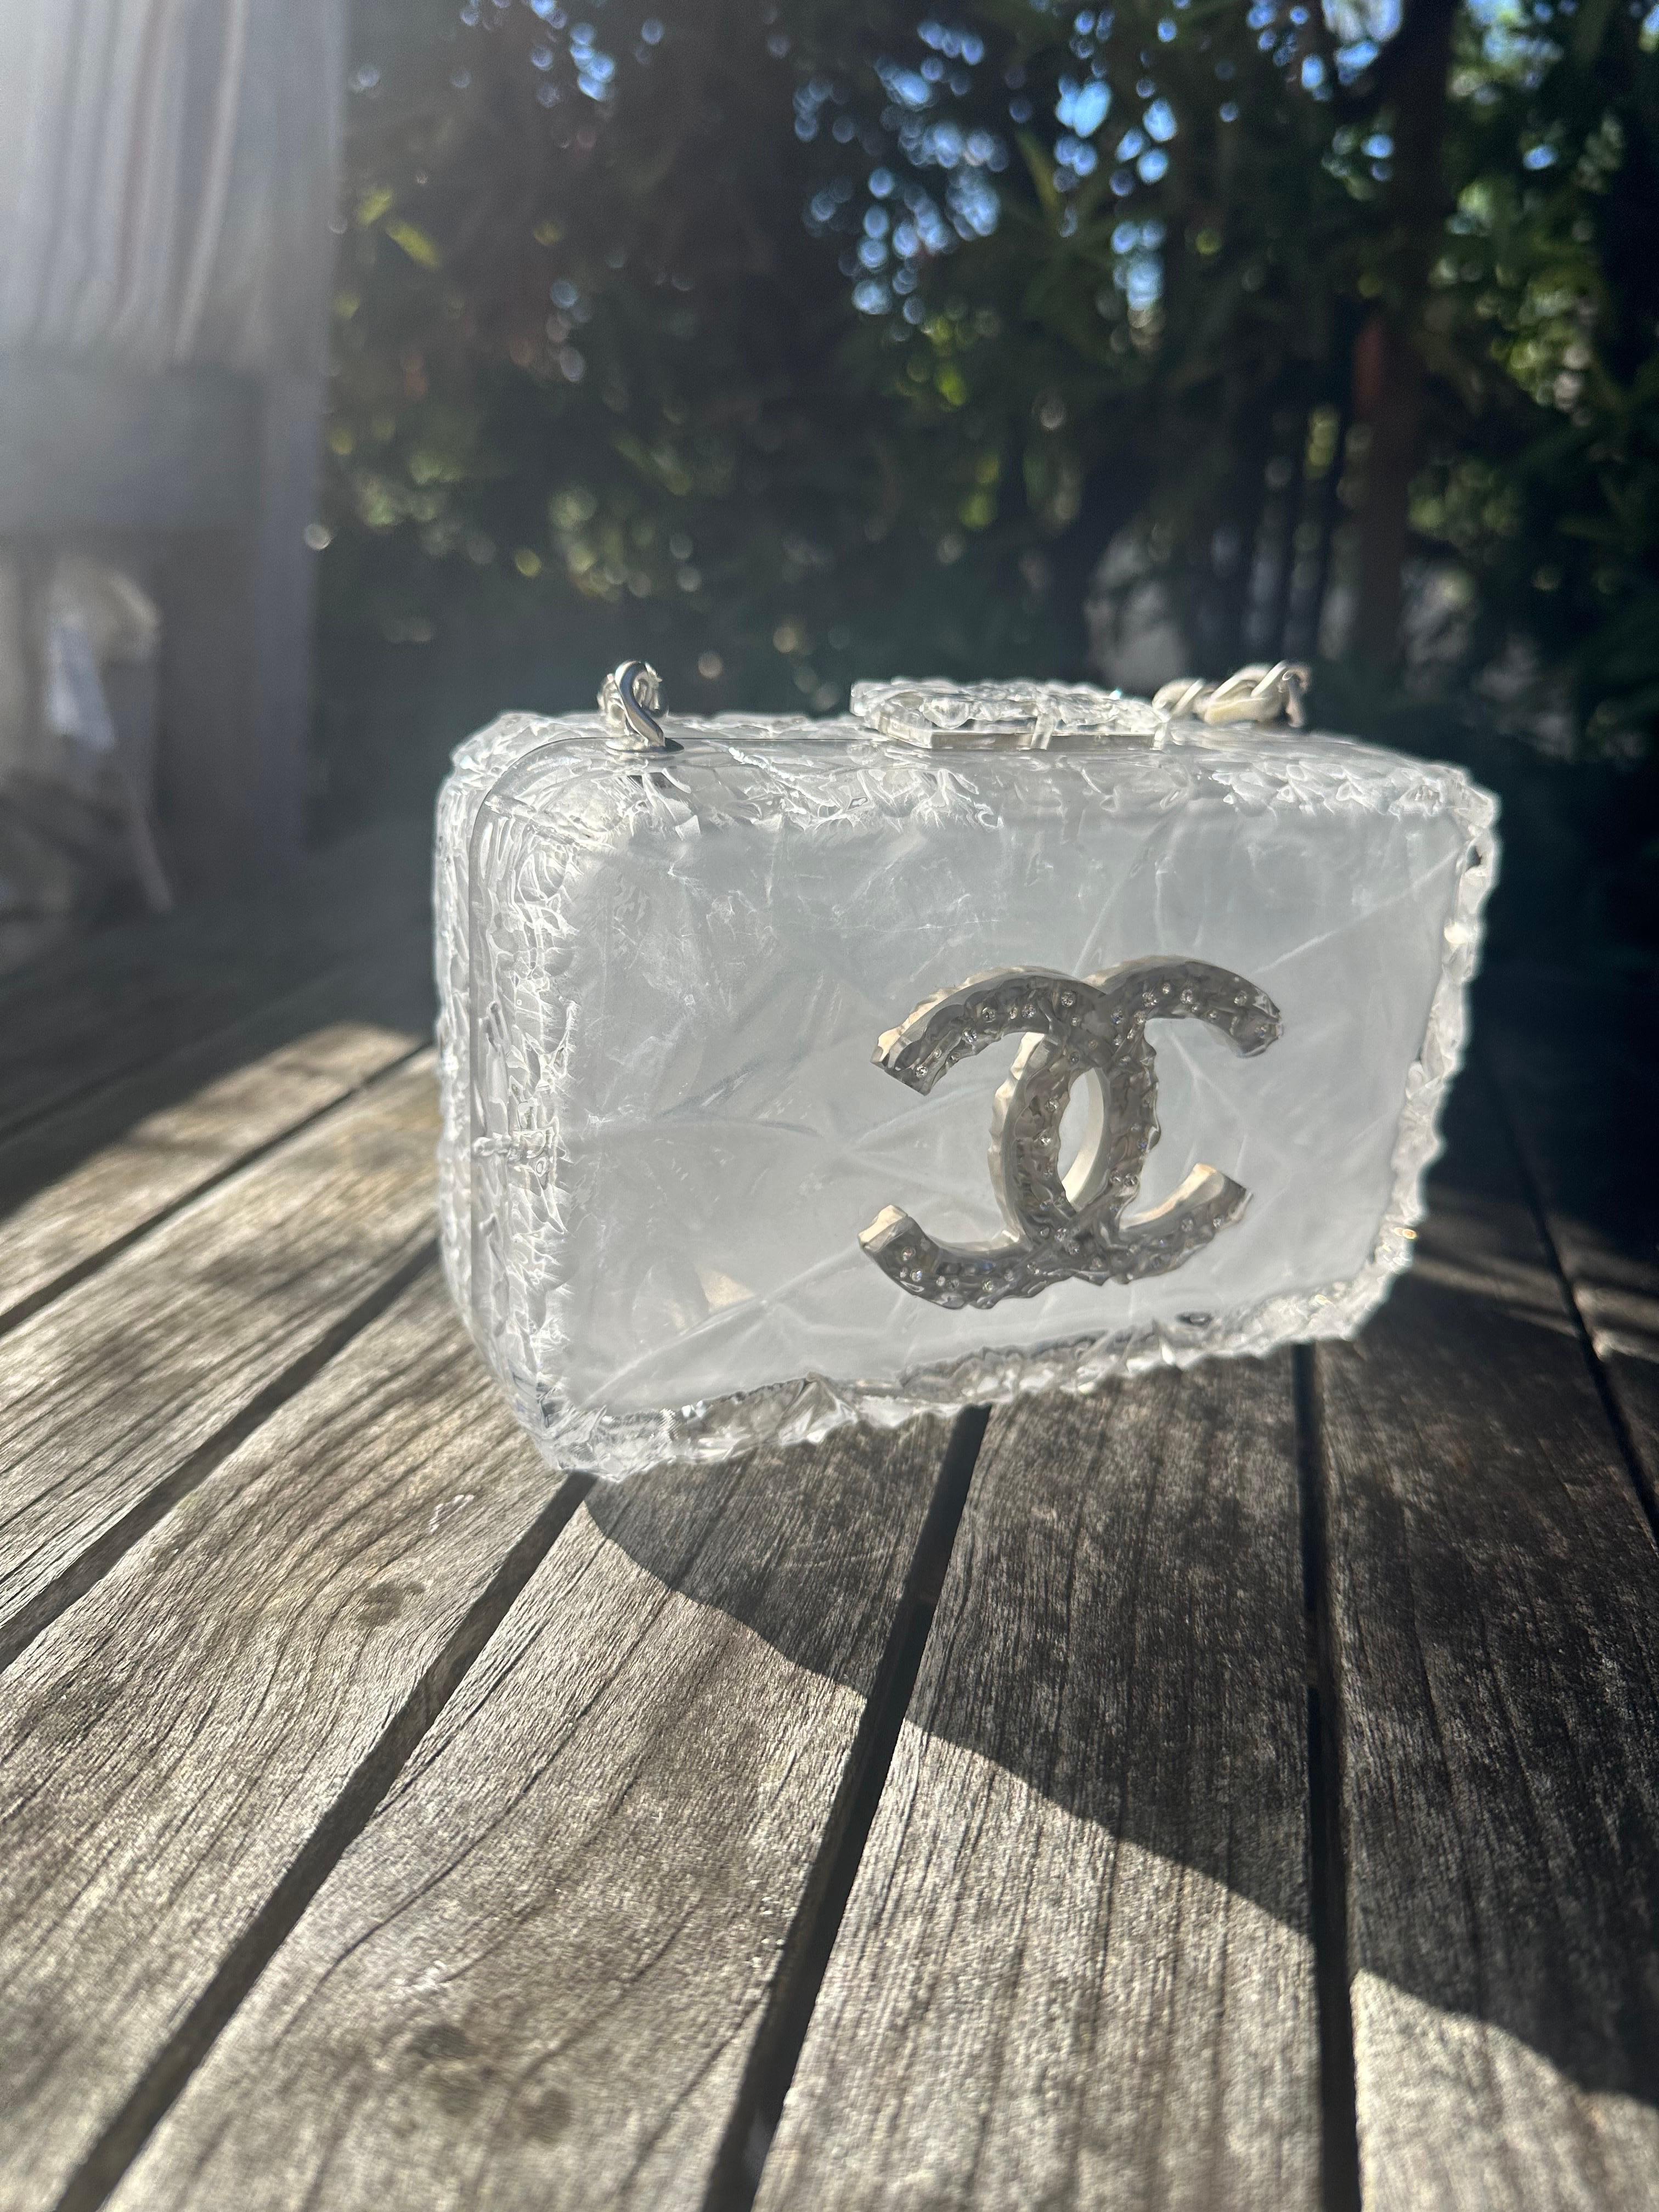 Chanel Rare 2010 Acrylic & Crystal Ice Cube Clutch

An ultra rare piece. 

15 w x 10.5 h x 5 d cm
Includes dustbag, original tag, care card, felt protector and box.